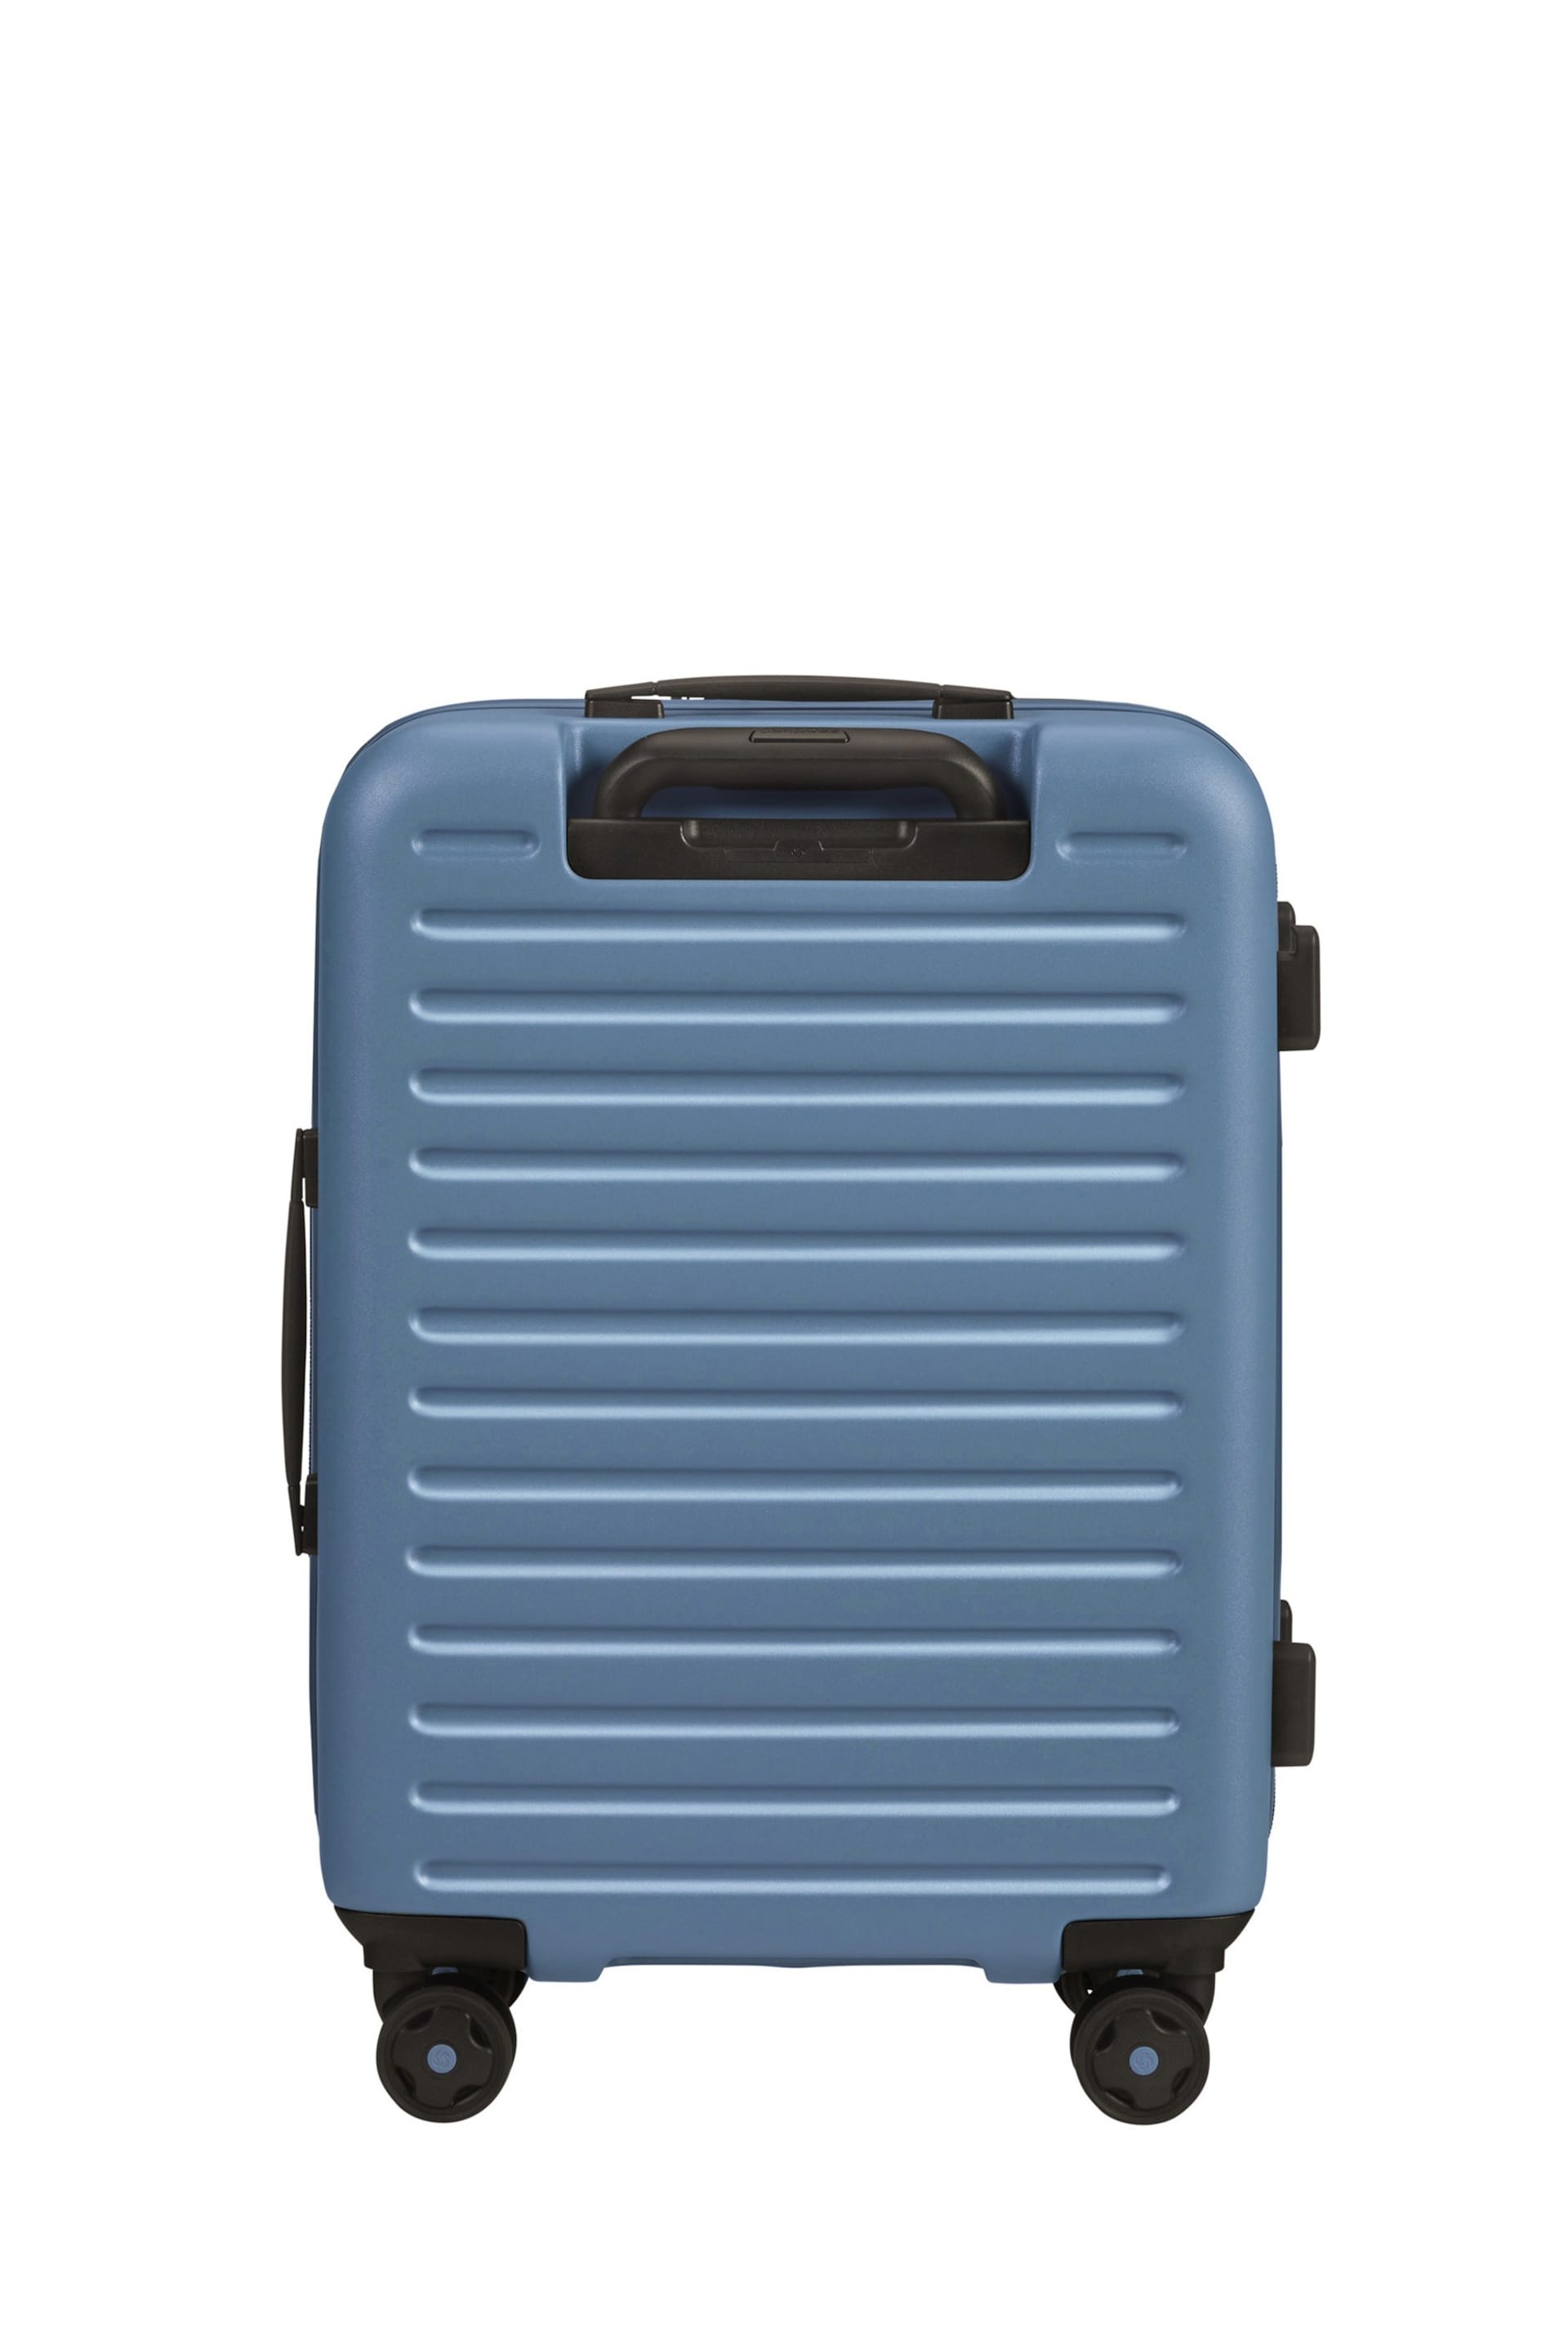 Samsonite StackD Spinner Cabin Suitcase 55cm - Image 2 of 2